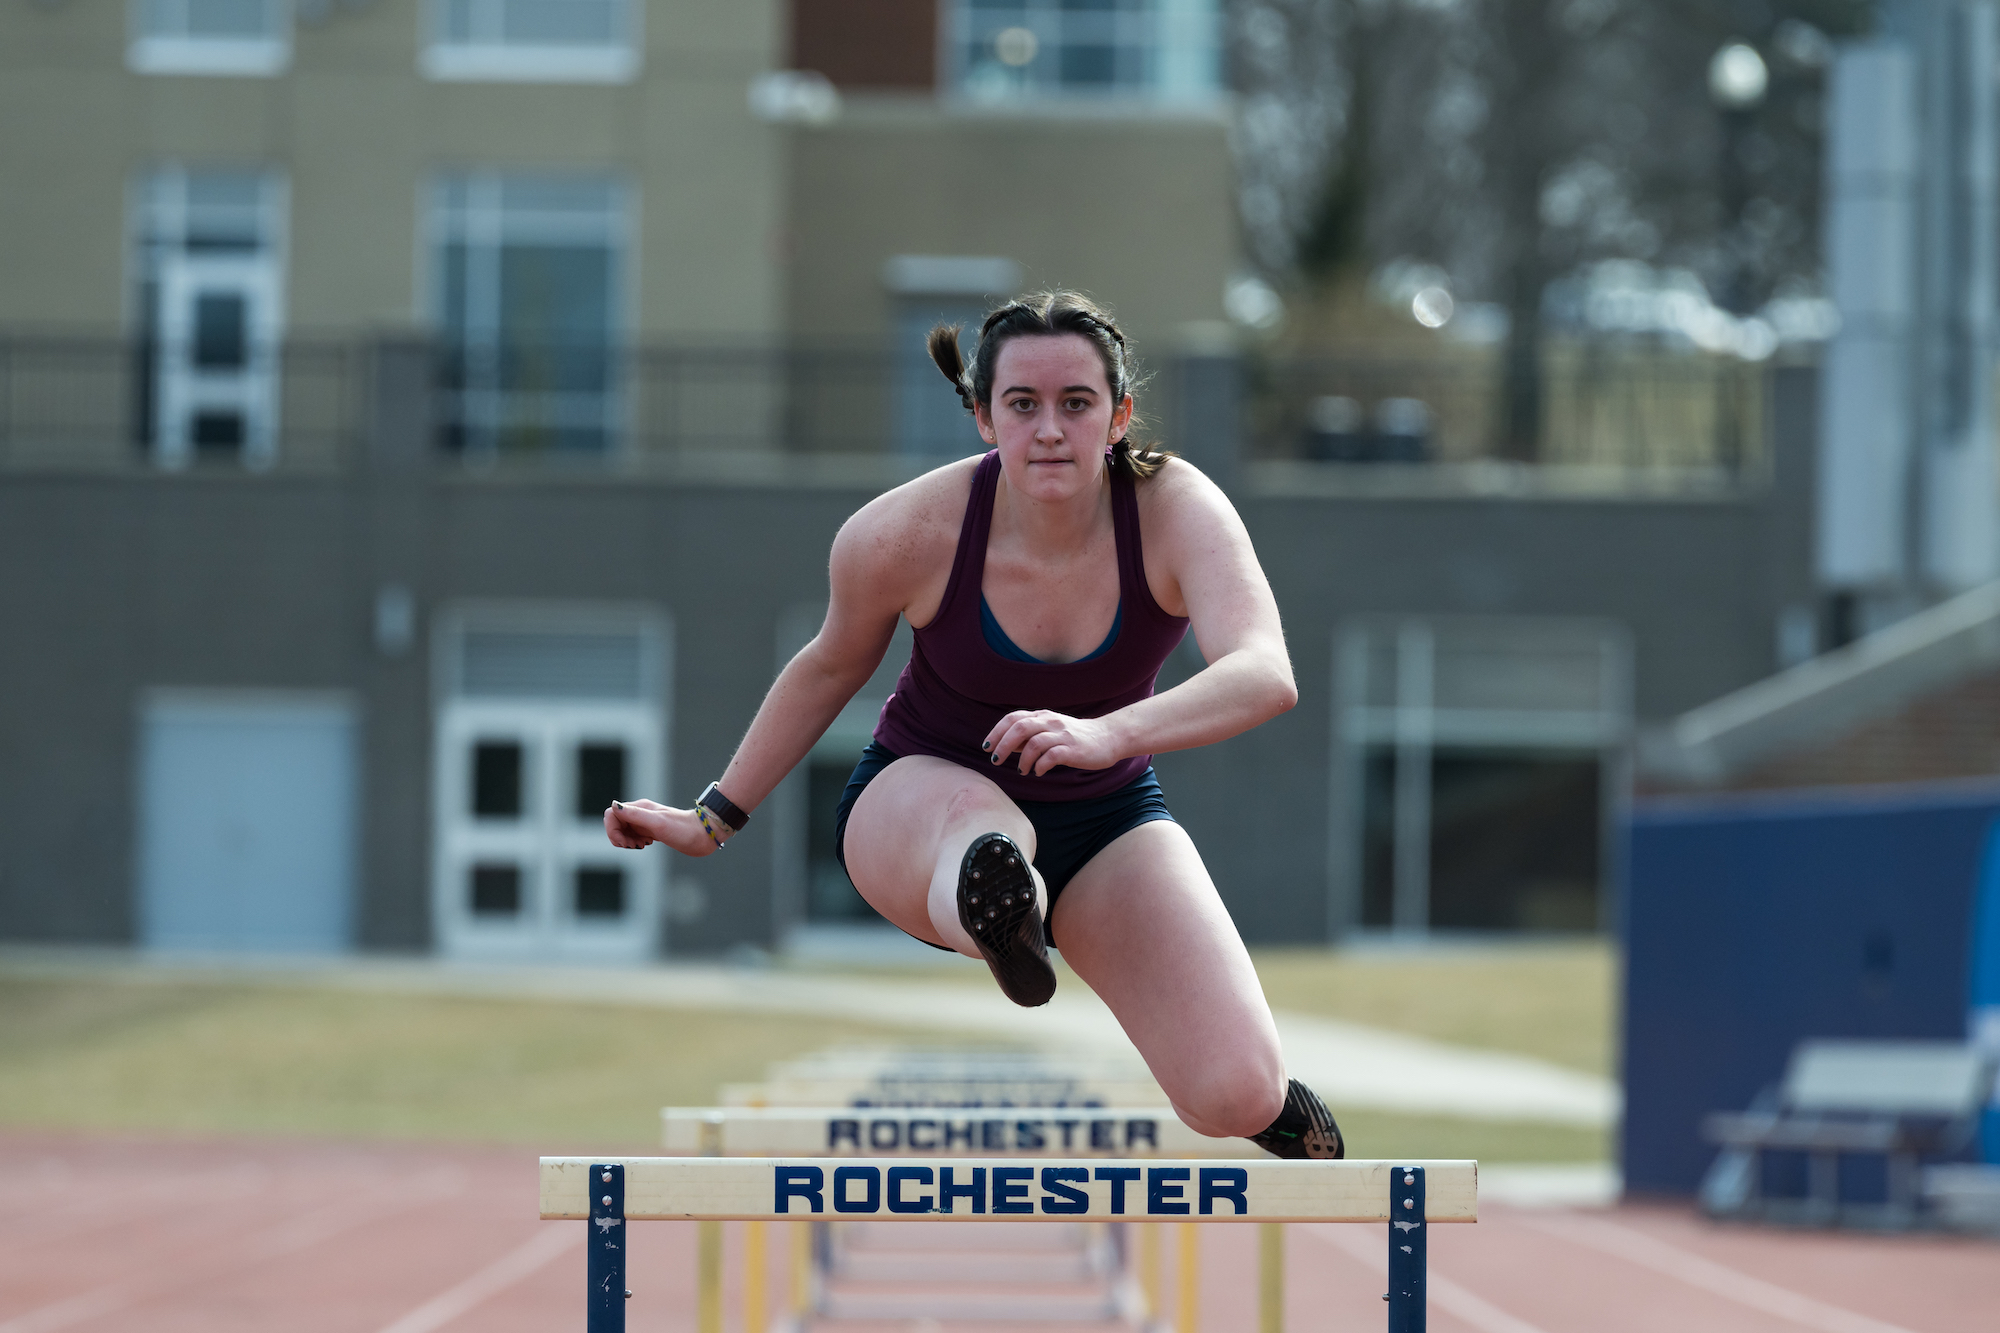 Female hurdler jumps over a Rochester-branded hurdle 